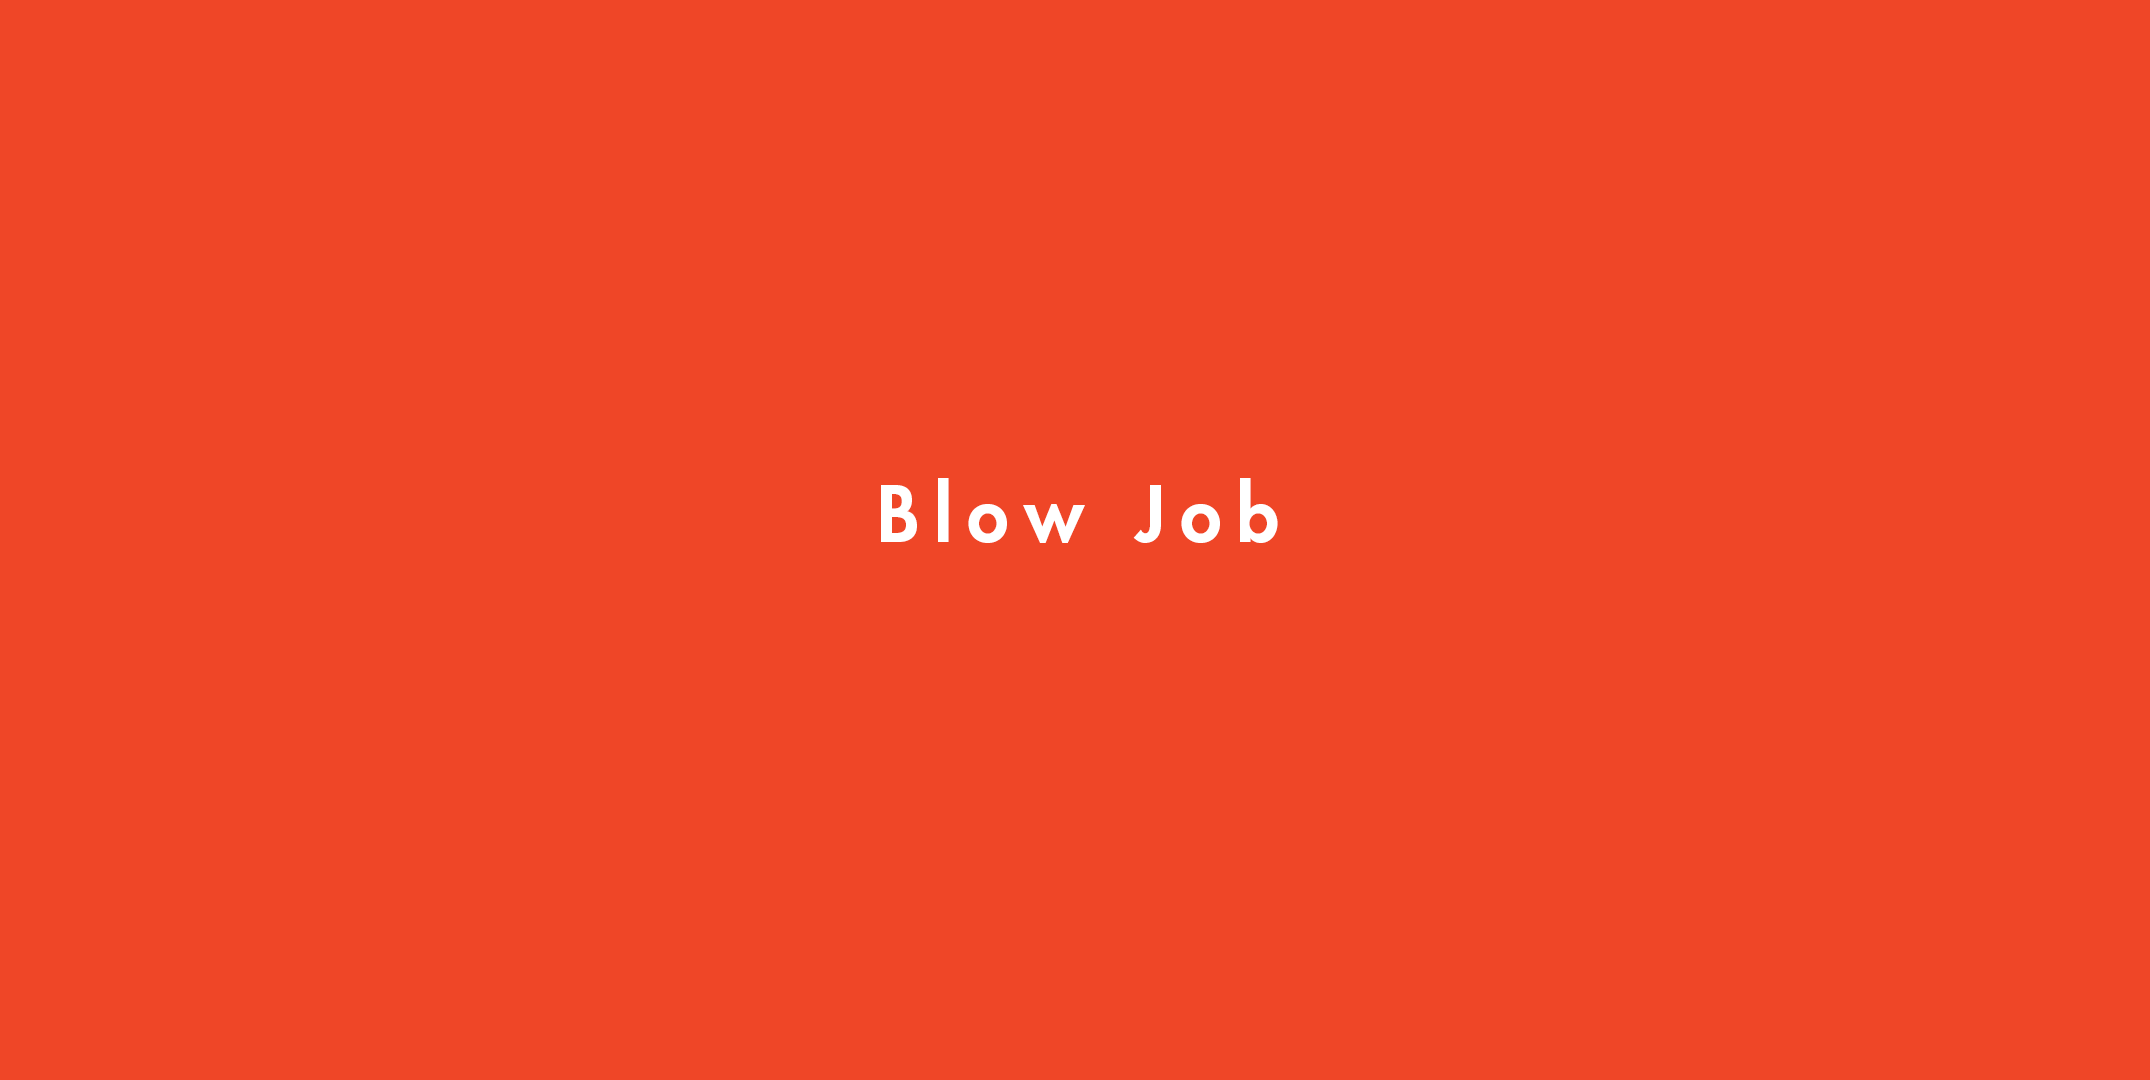 Blow Job Definition pic image